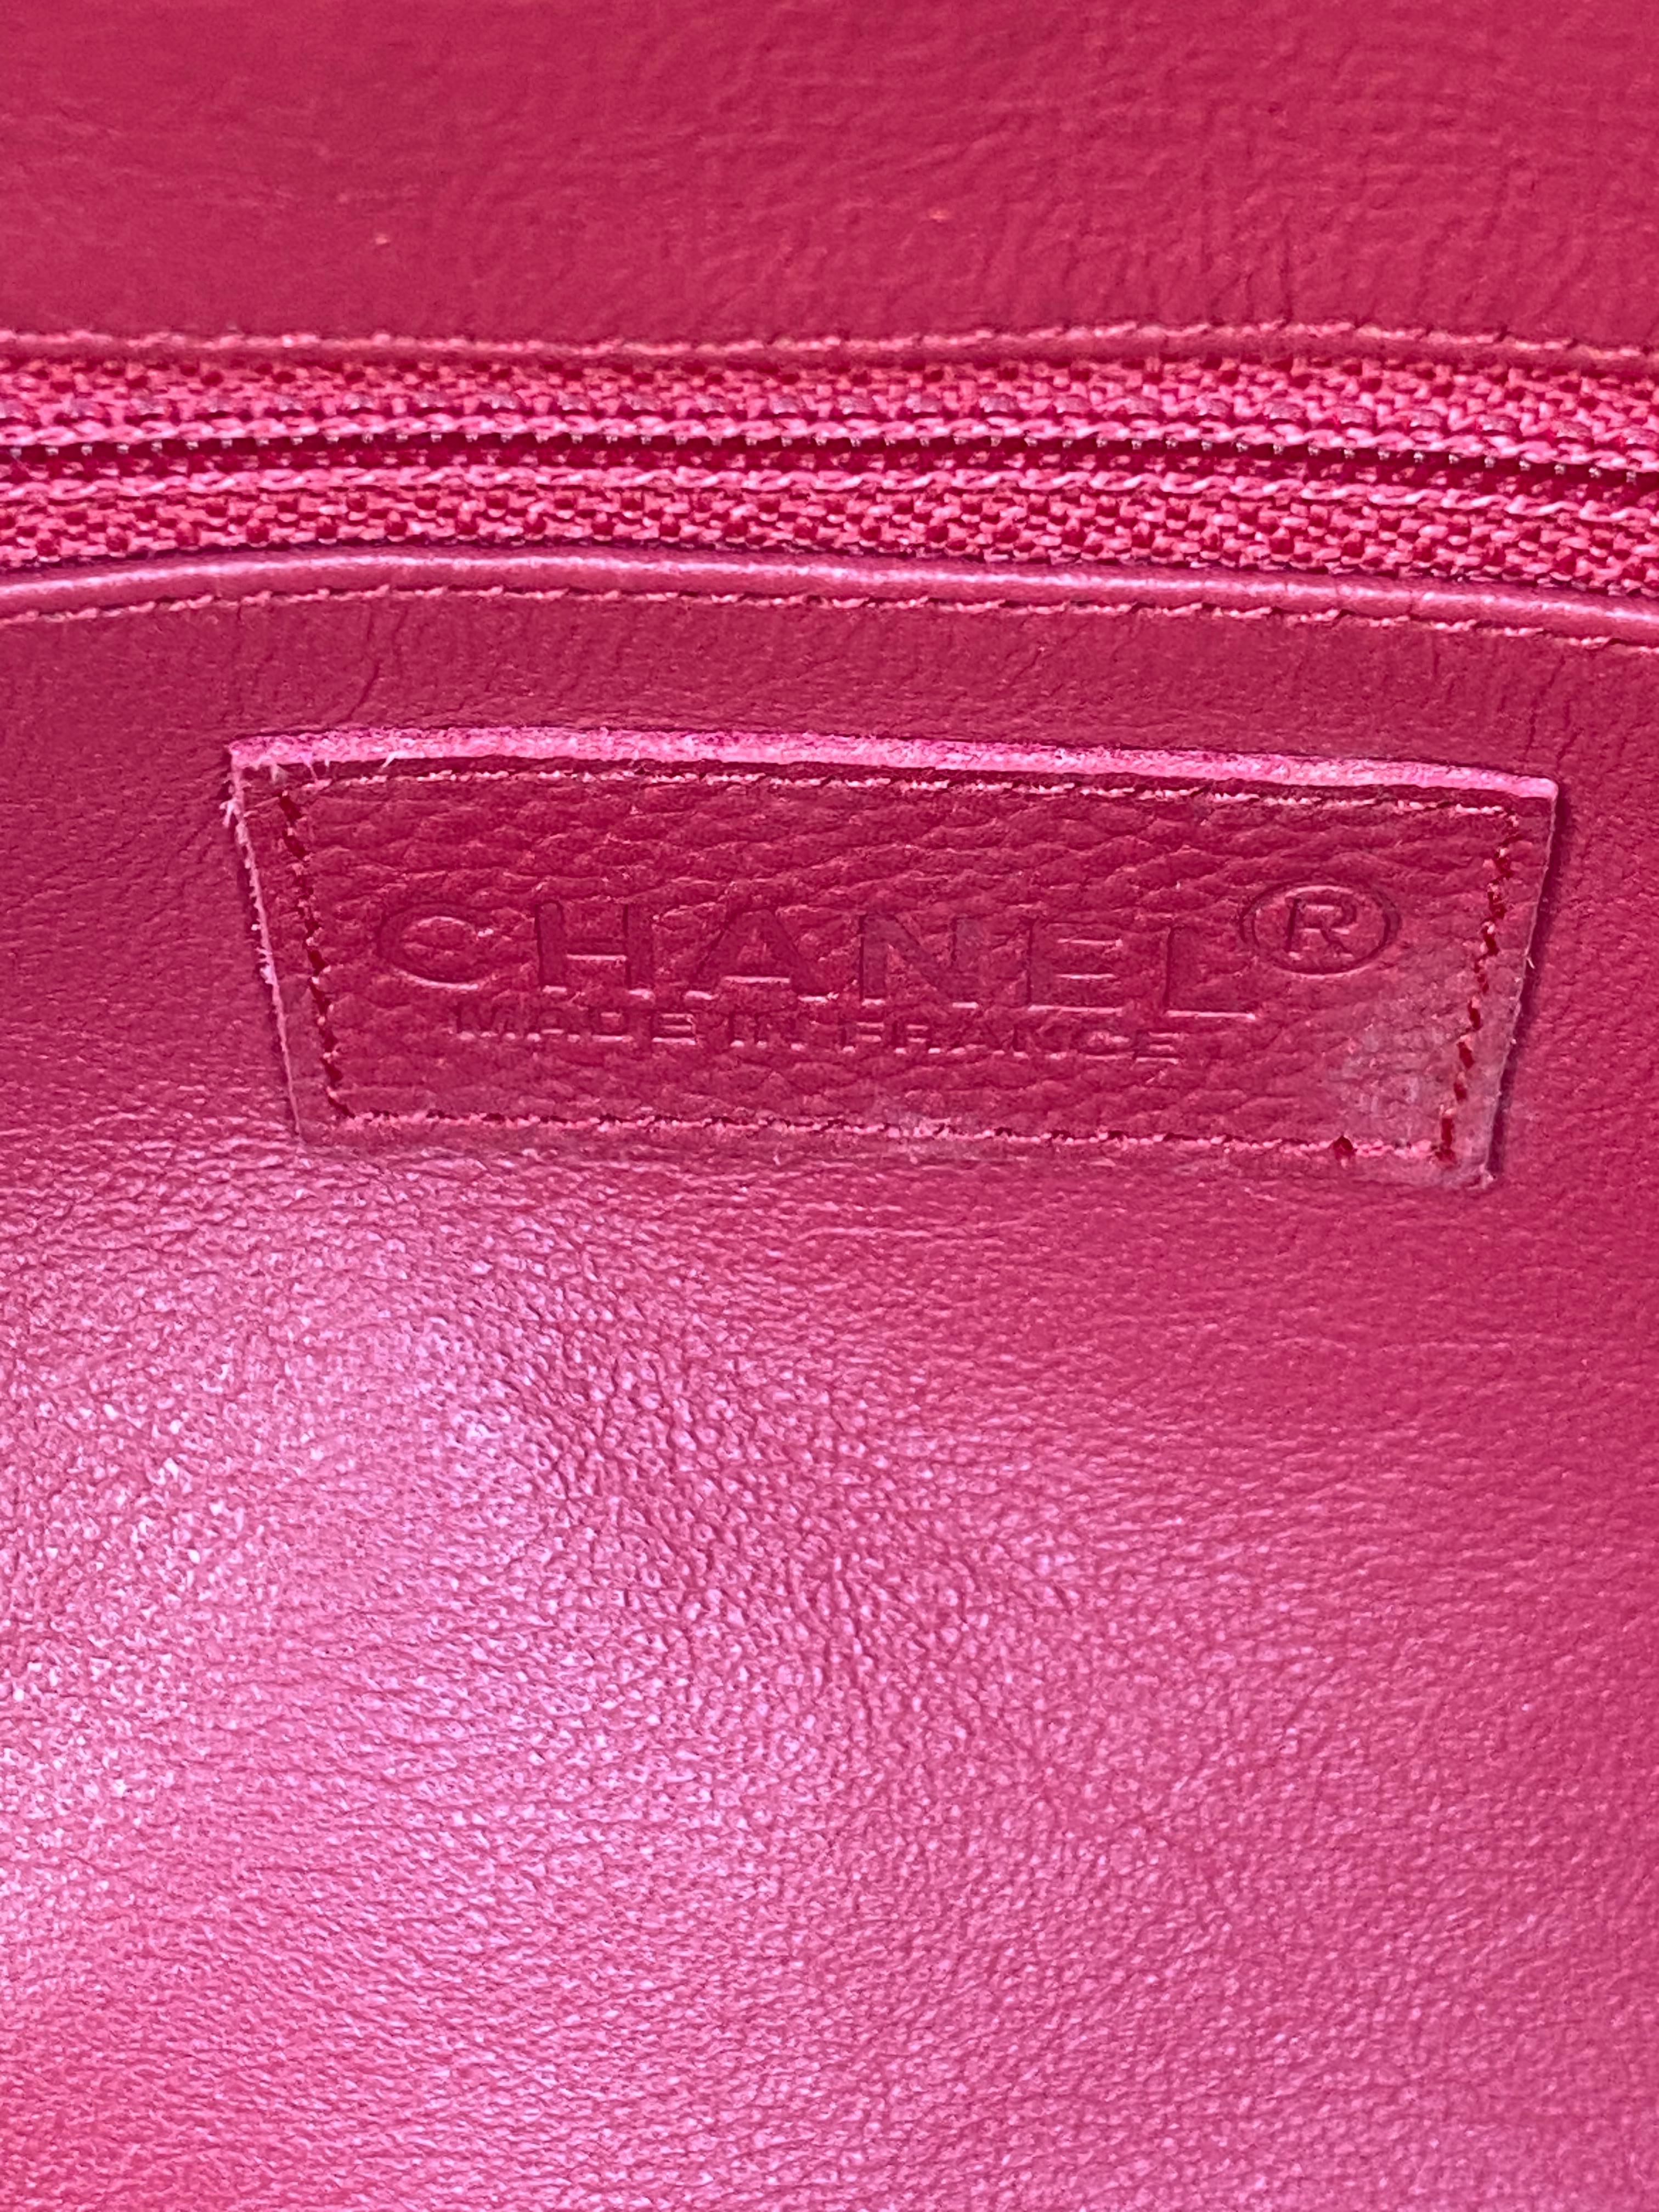 Chanel Rare Vintage Raspberry Pink Caviar Weekender Travel Duffle Shopper Bag For Sale 10